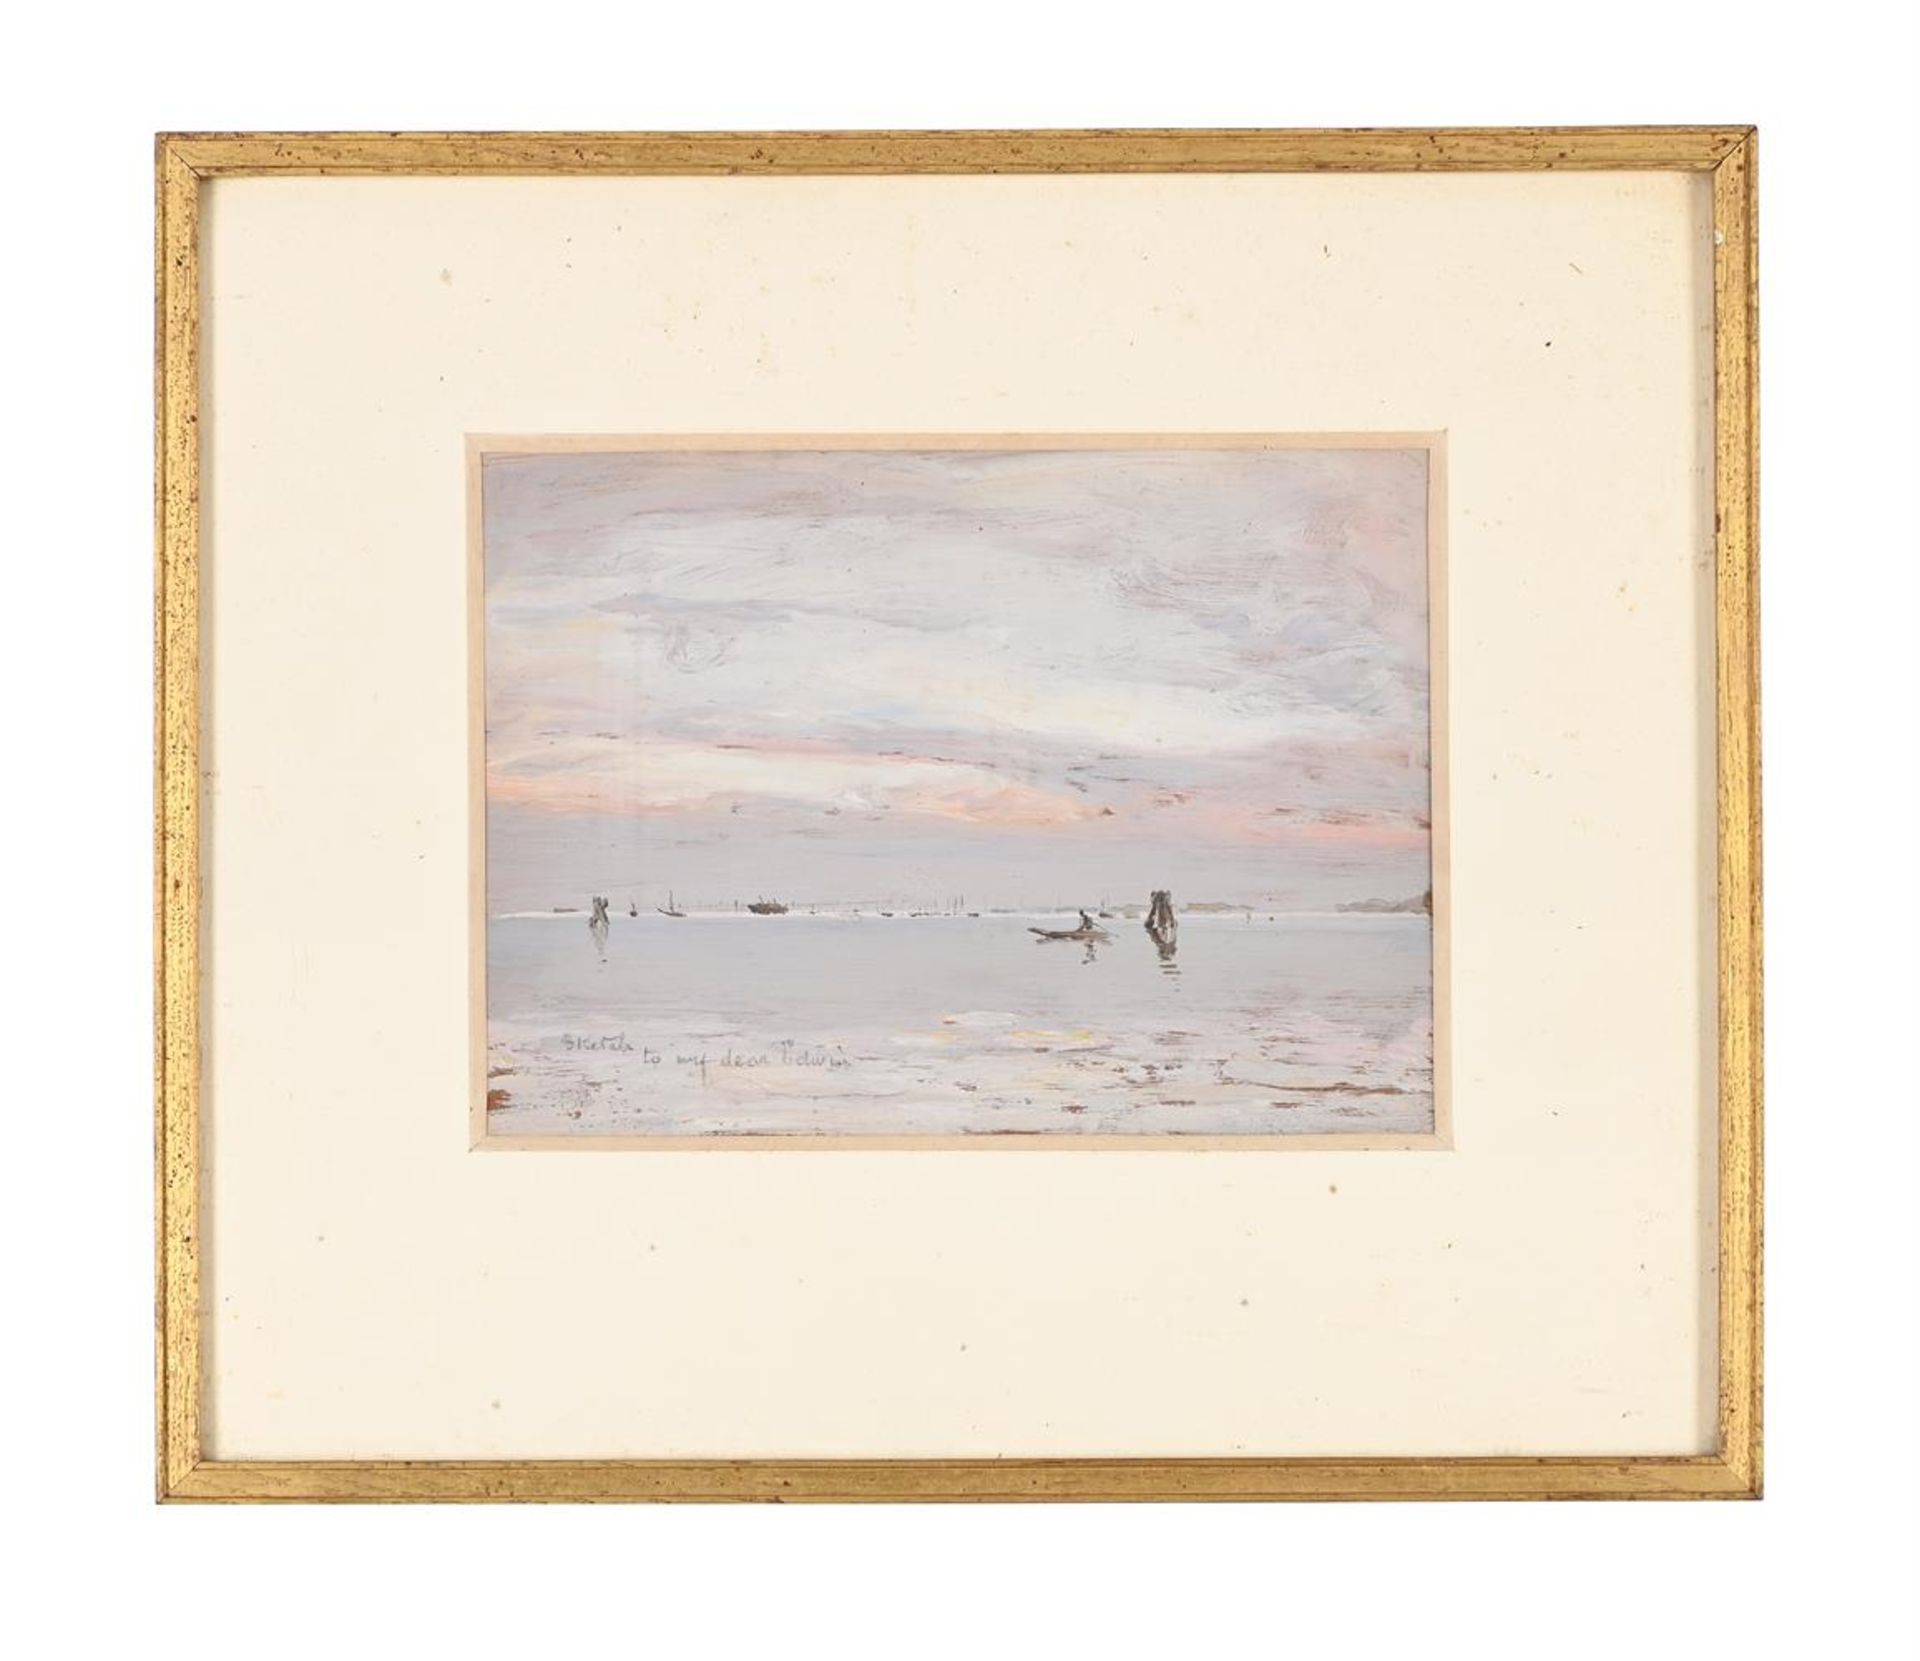 SIR DAVID MURRAY (BRITISH 1849-1933), SEASCAPE - Image 2 of 3